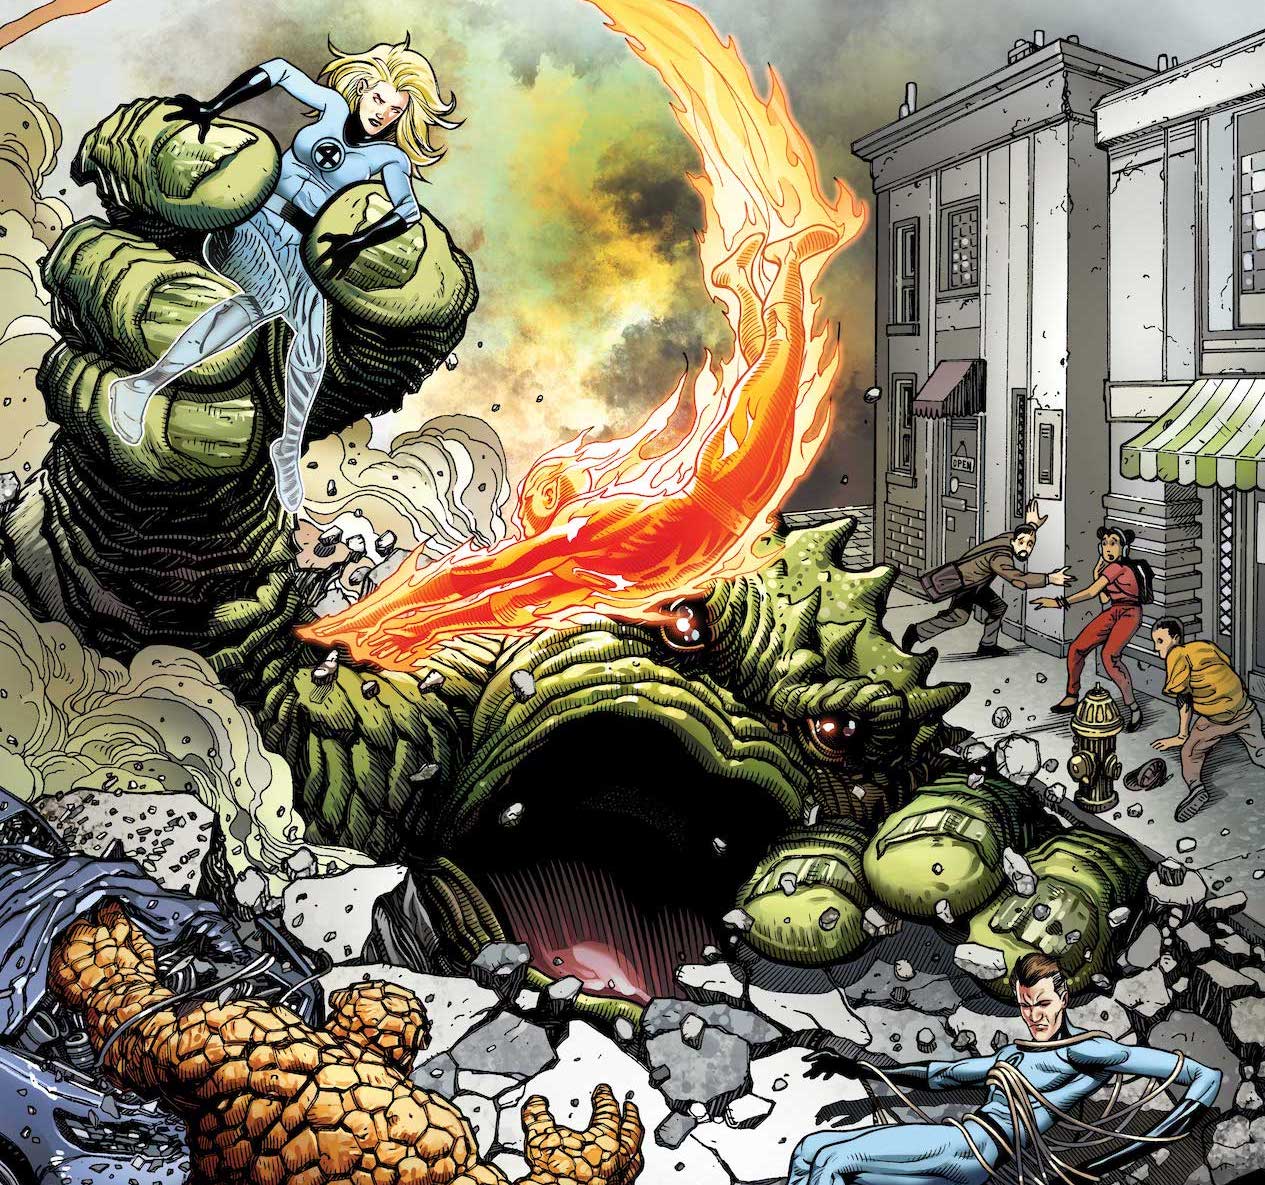 Marvel announces 'Fantastic Four Anniversary Tribute' #1 for November